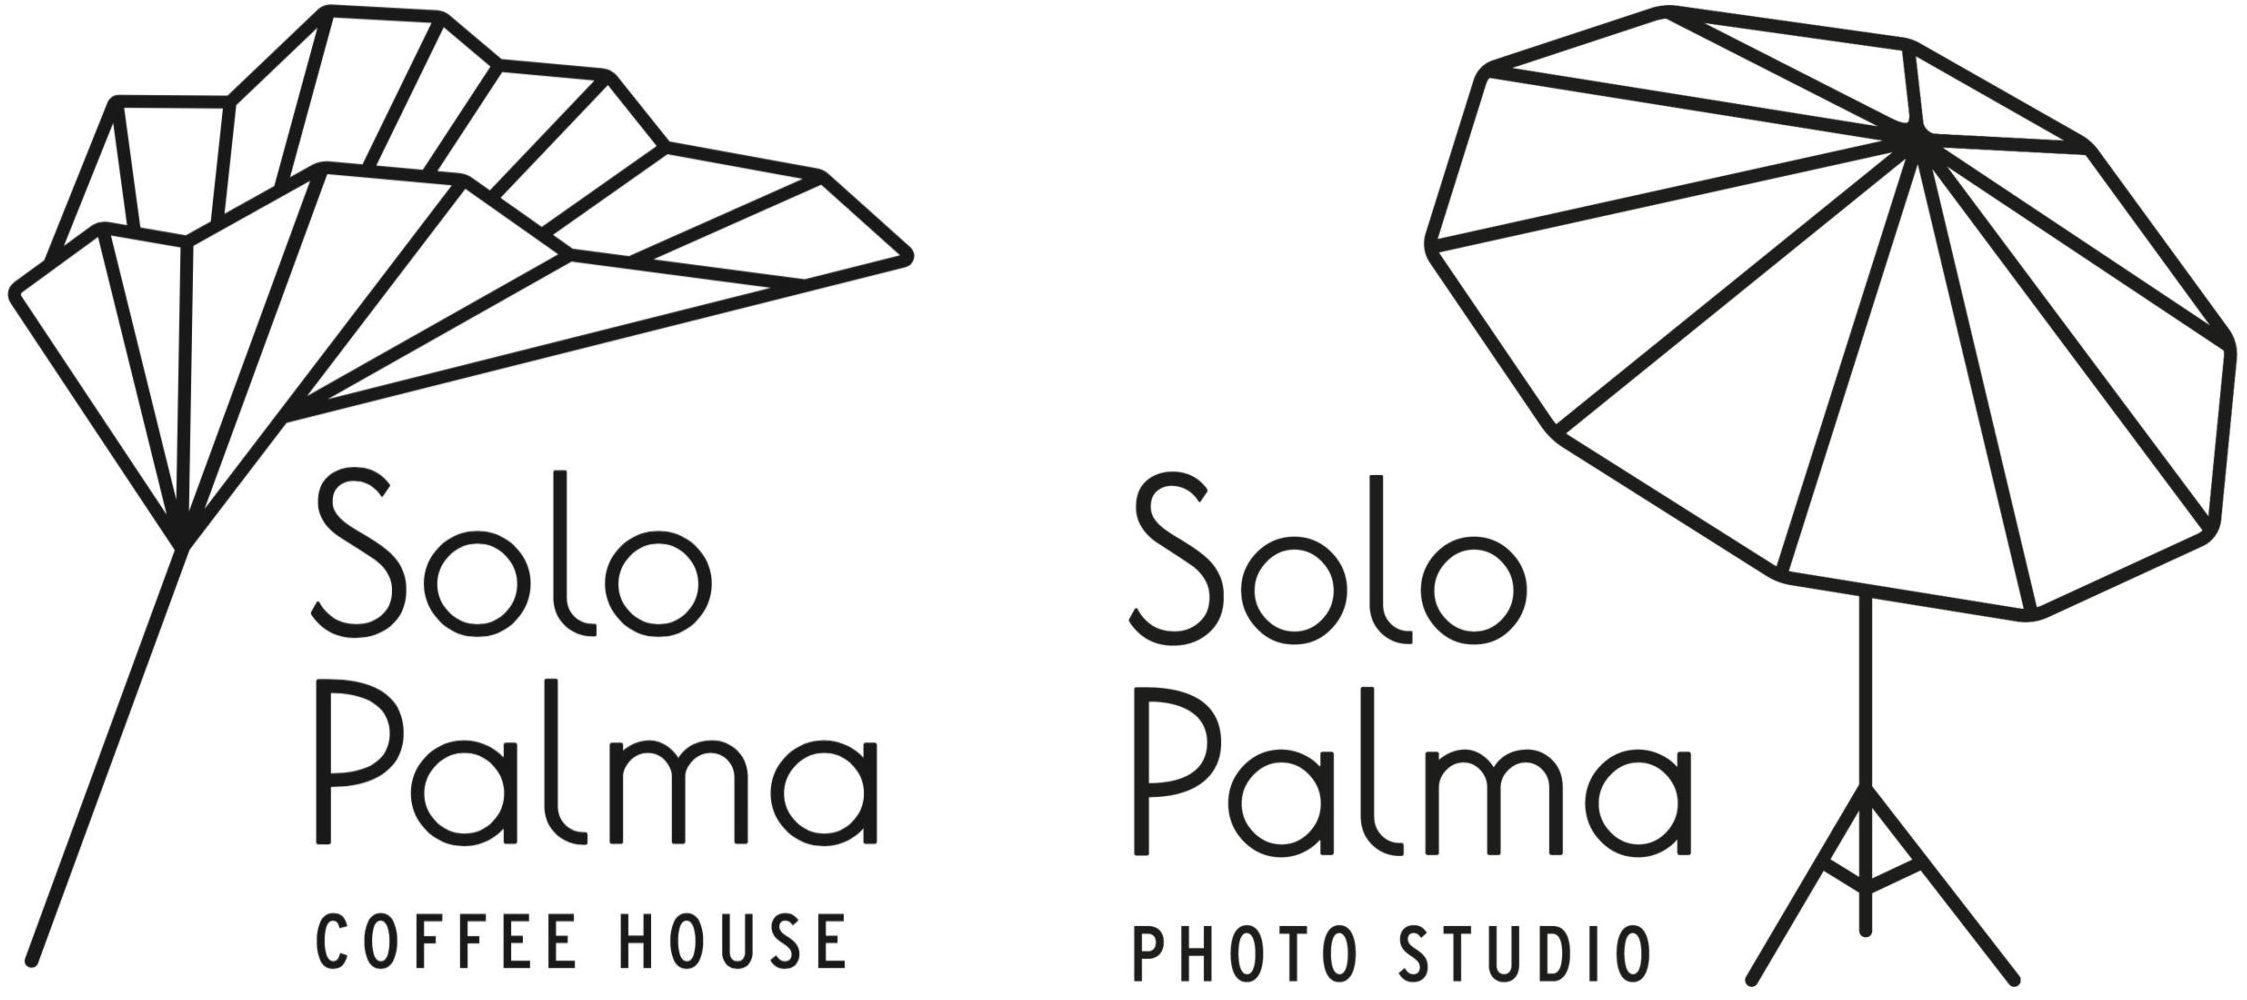 Solo Palma Coffee House & Photo Studio Orléans